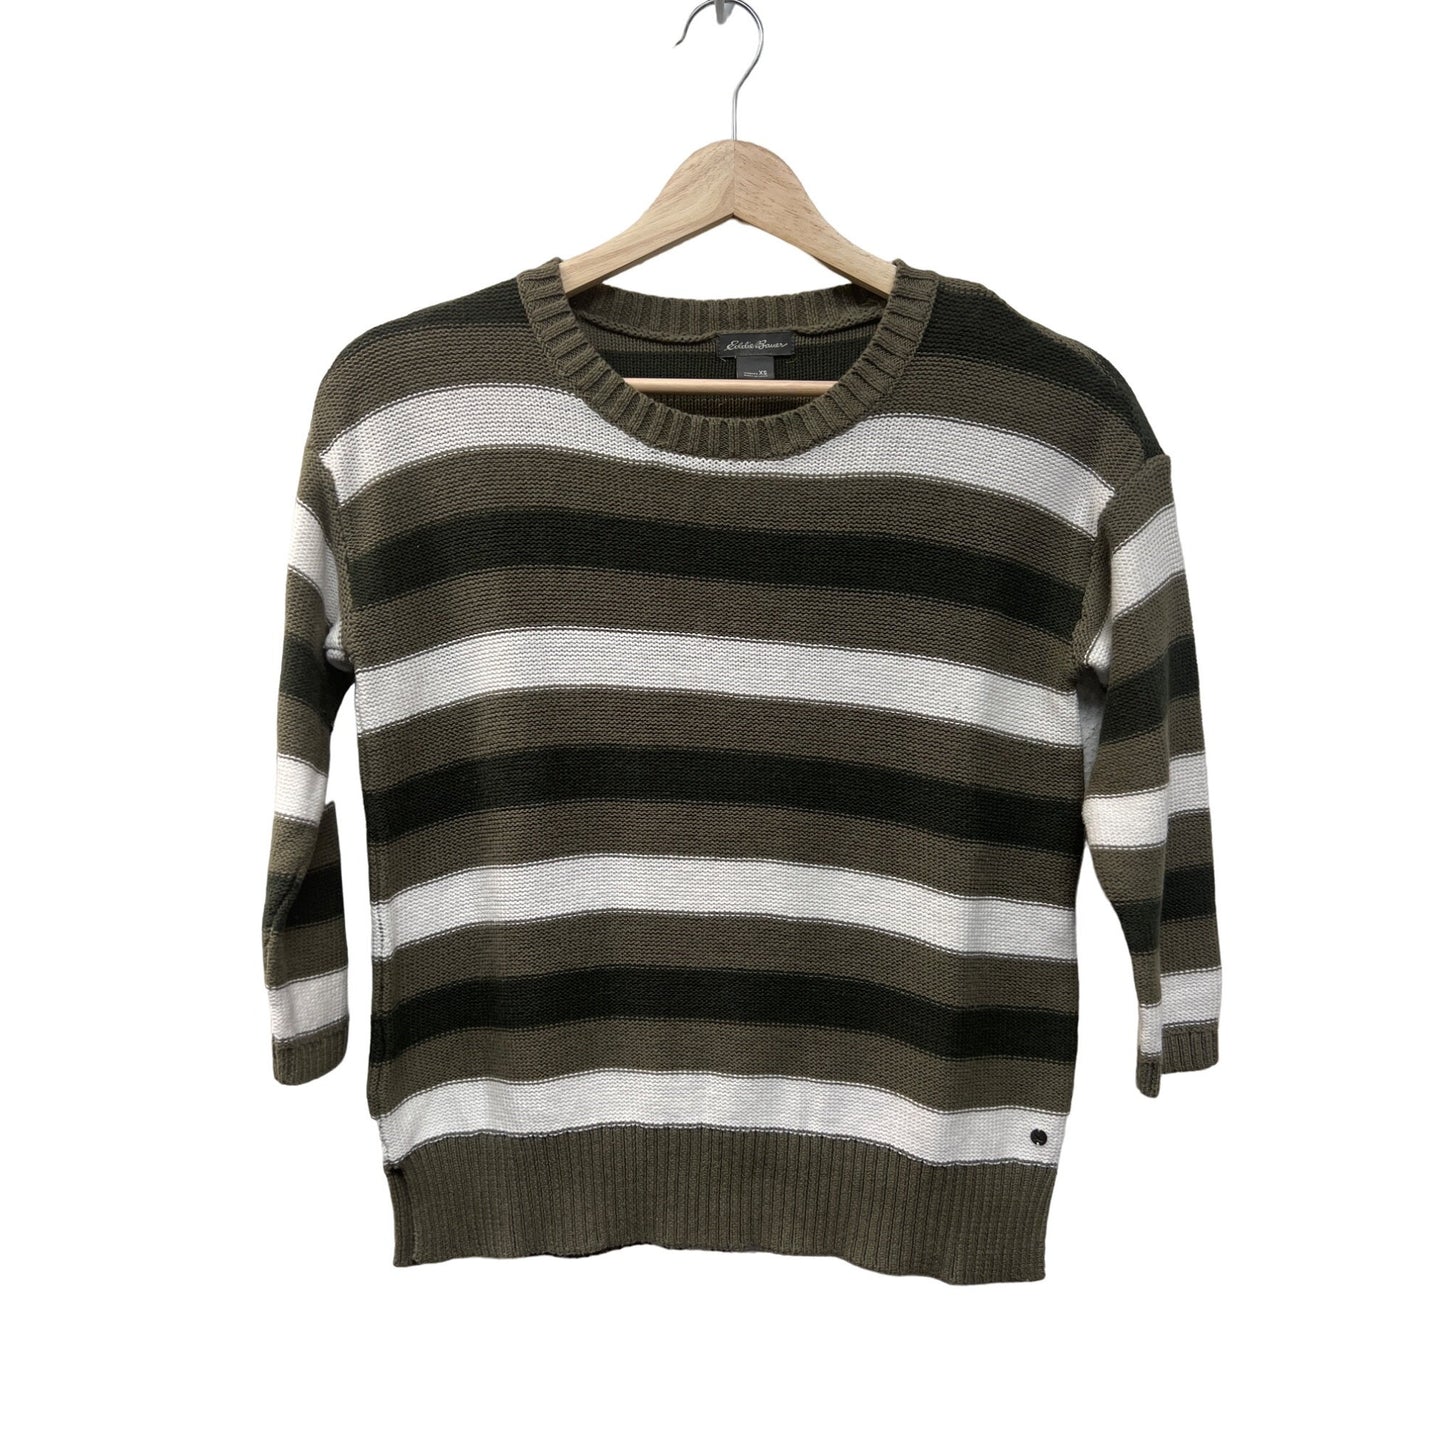 Eddie Bauer Green and White Striped Crewneck Sweater